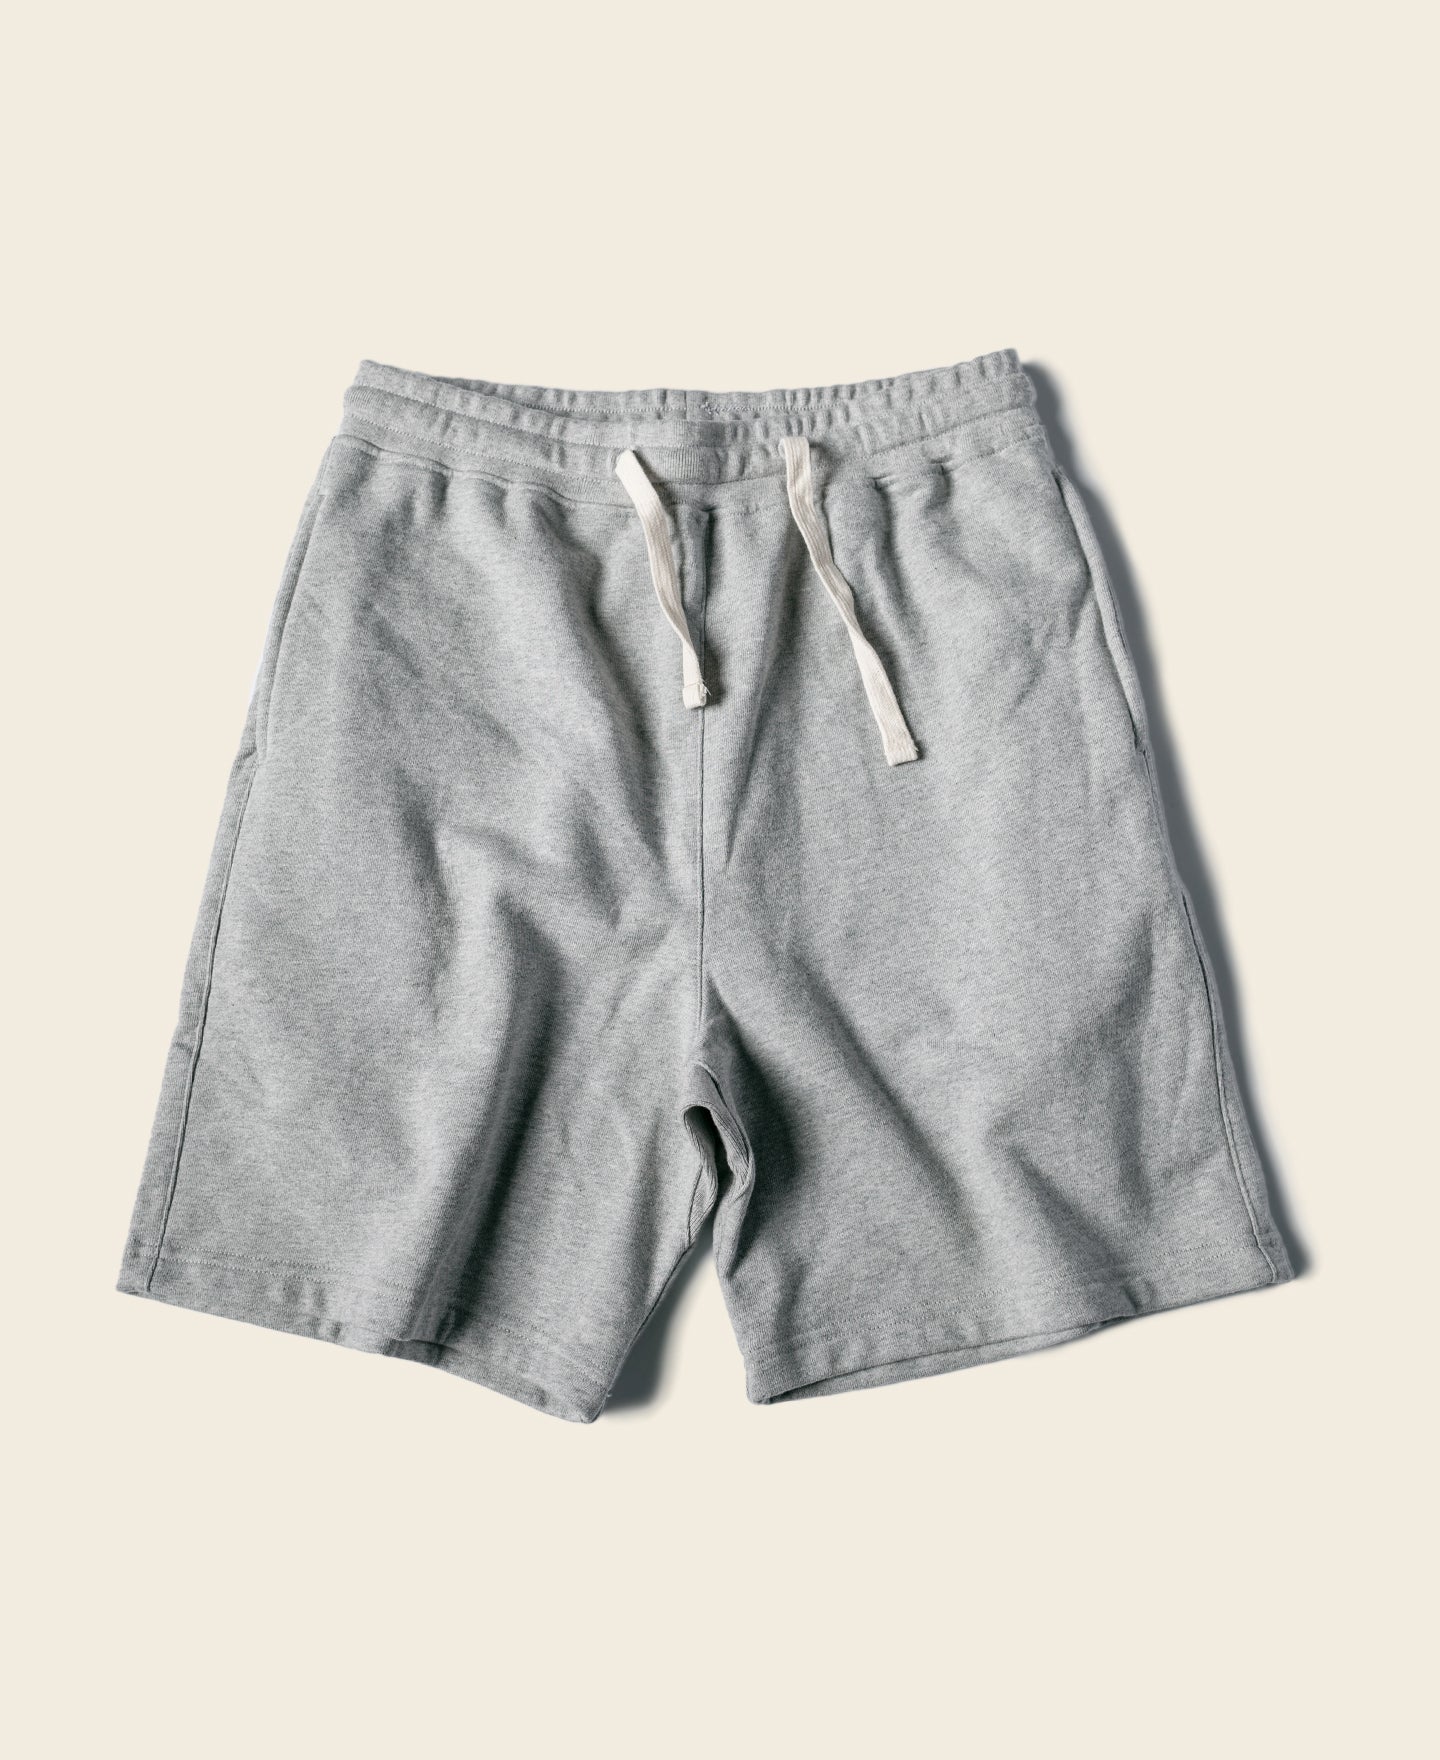 Grey Shorts.